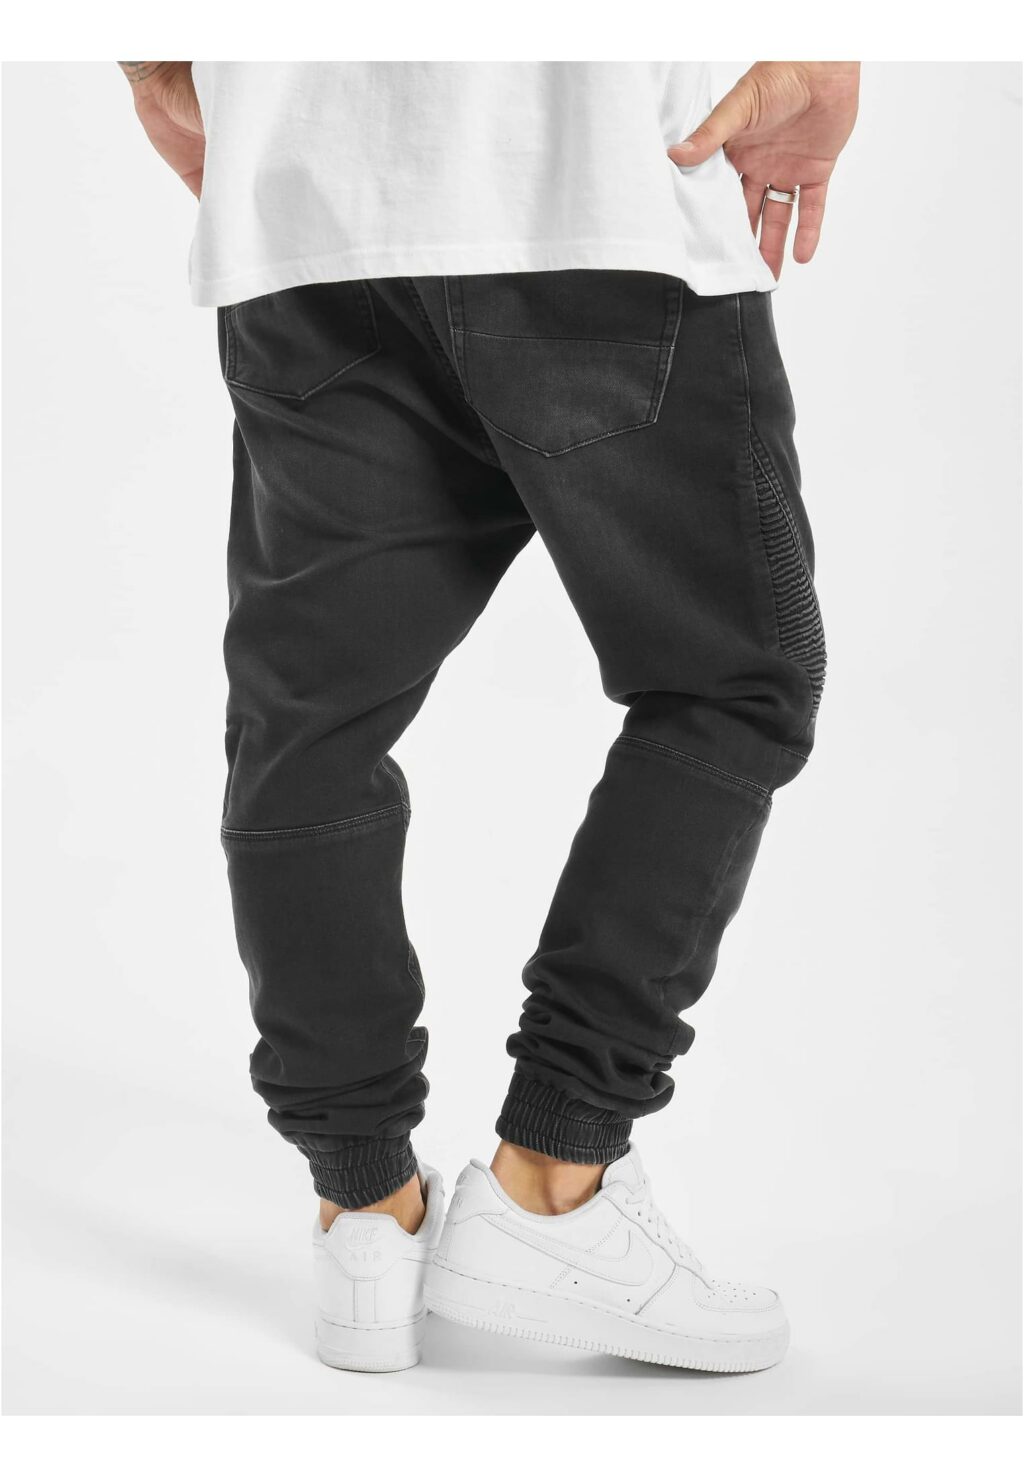 Anti Fit Jeans black DFJS154